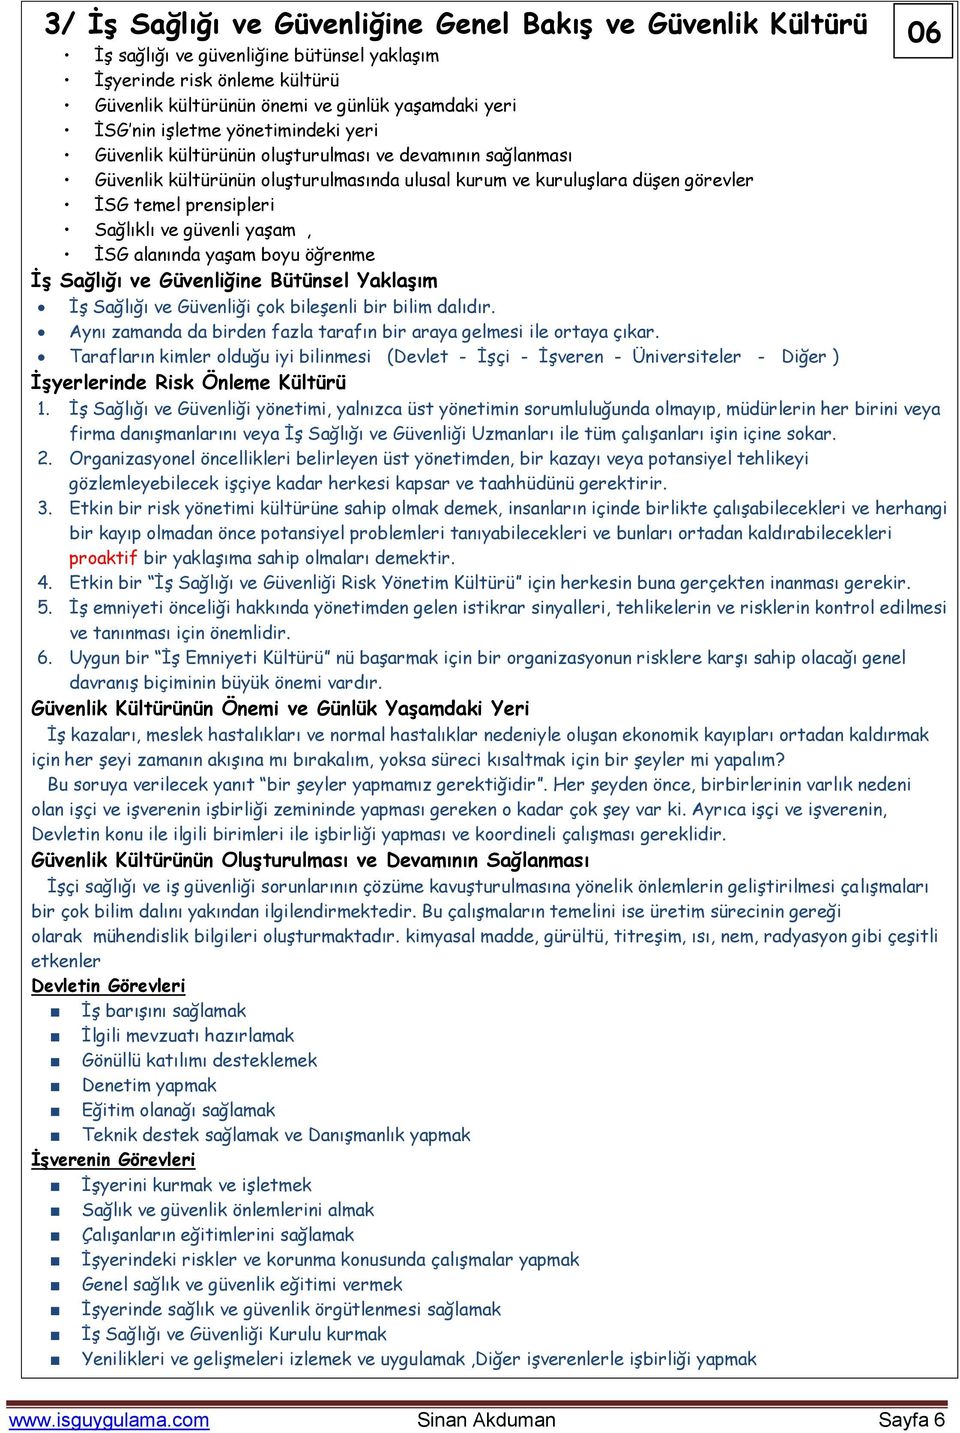 İSG ÖZET DERS NOTLARI - PDF Free Download